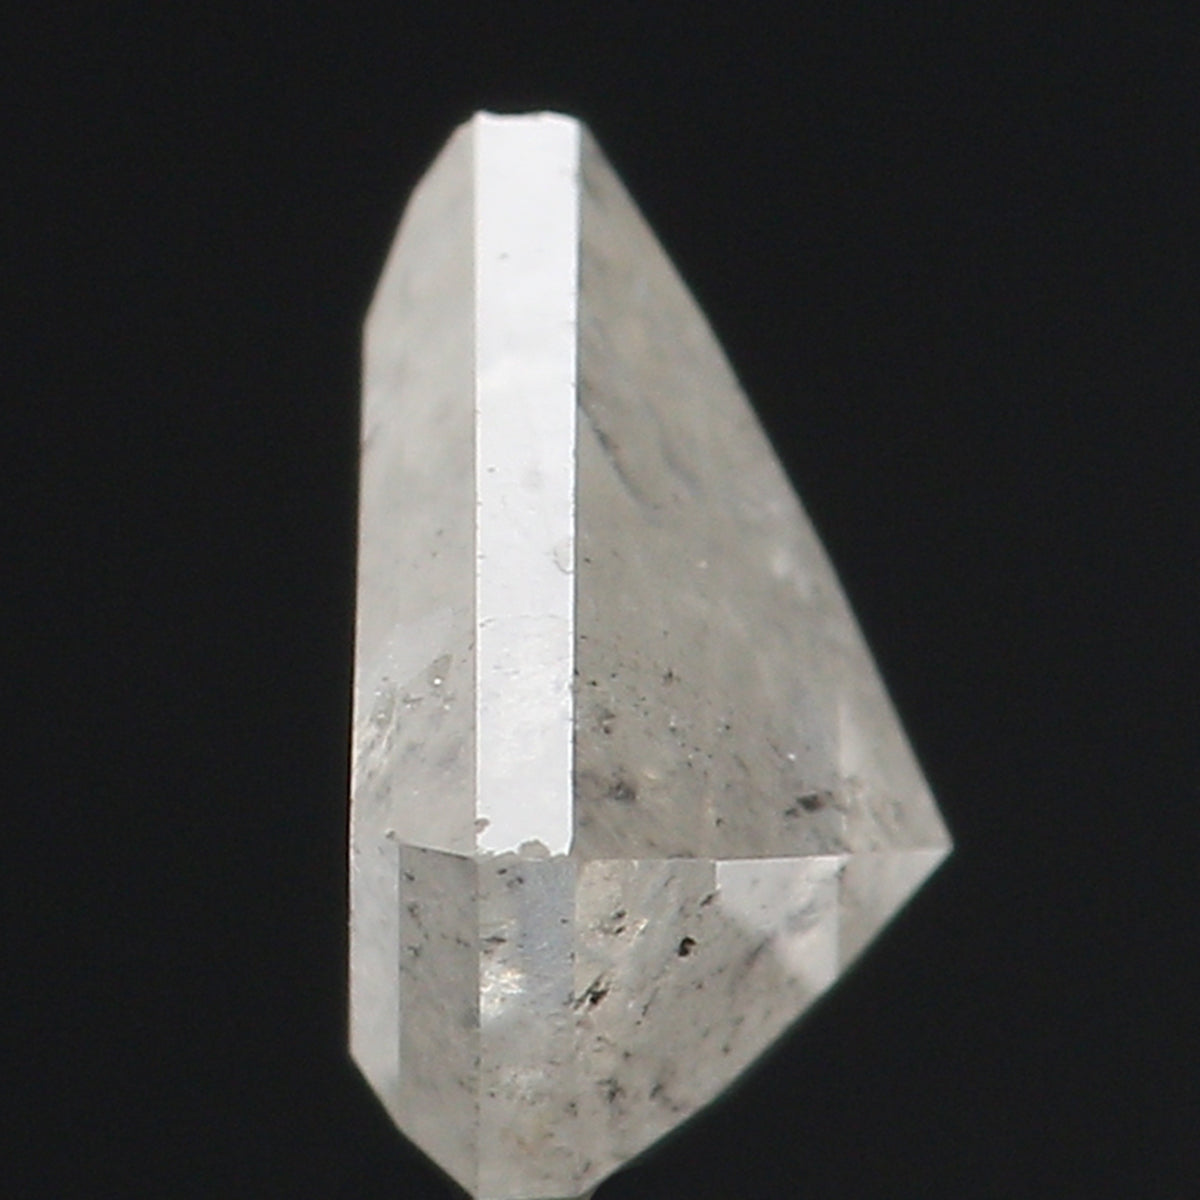 0.47 Ct Natural Loose Diamond, Shield Cut Diamond, Grey Color Diamond, Rose Cut Diamond, Real Rustic Diamond, Antique Diamond KDL9683